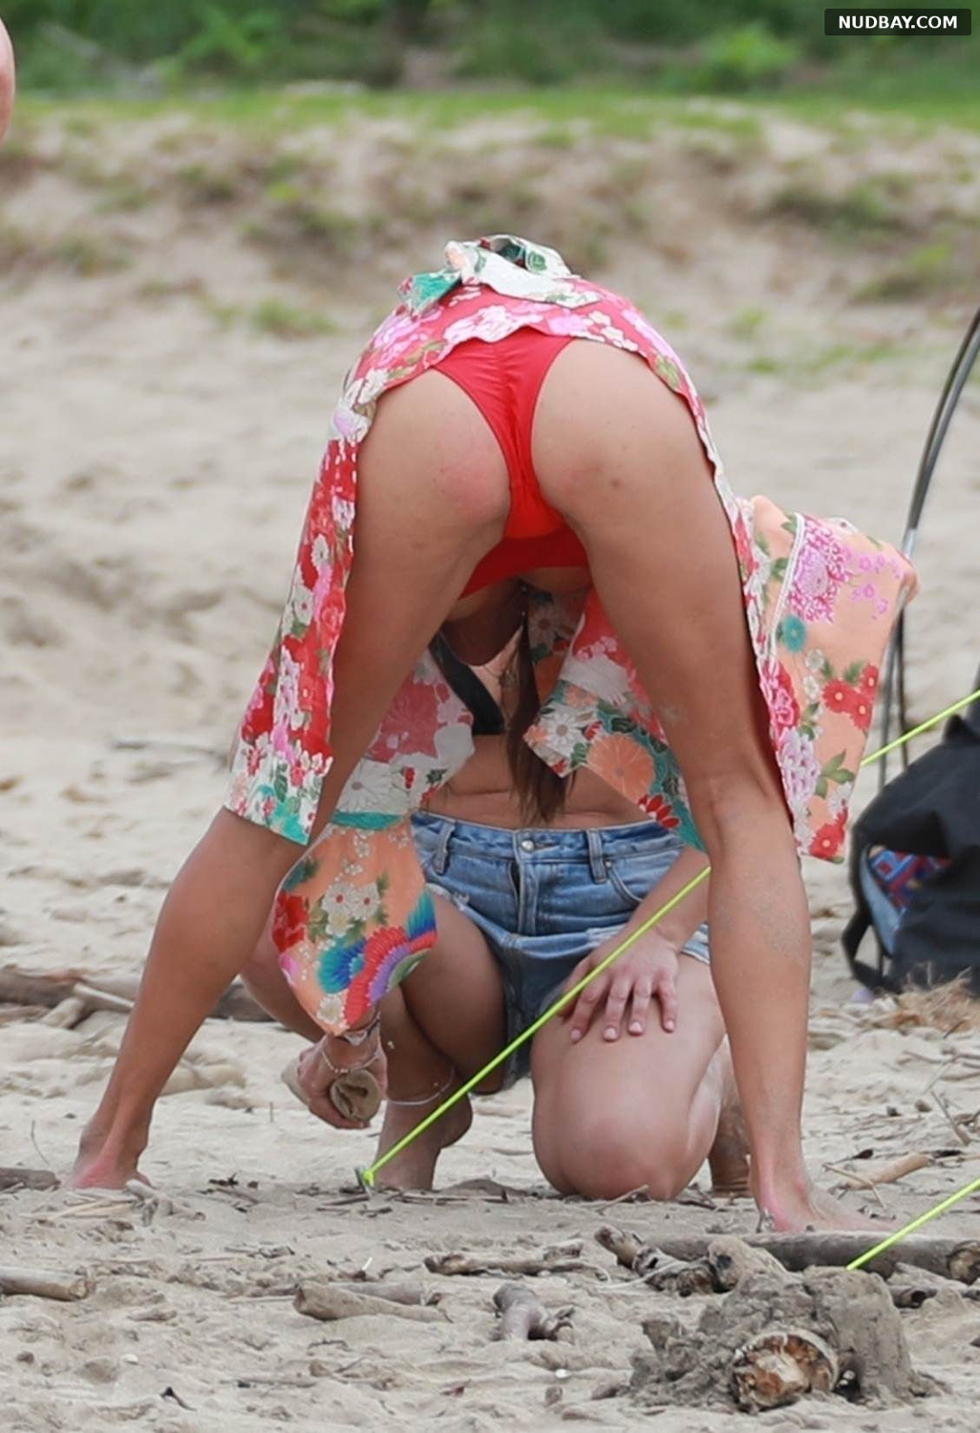 Alessandra Ambrosio Ass Hole in a red bikini on the beach in Hawaii Apr 07 2018